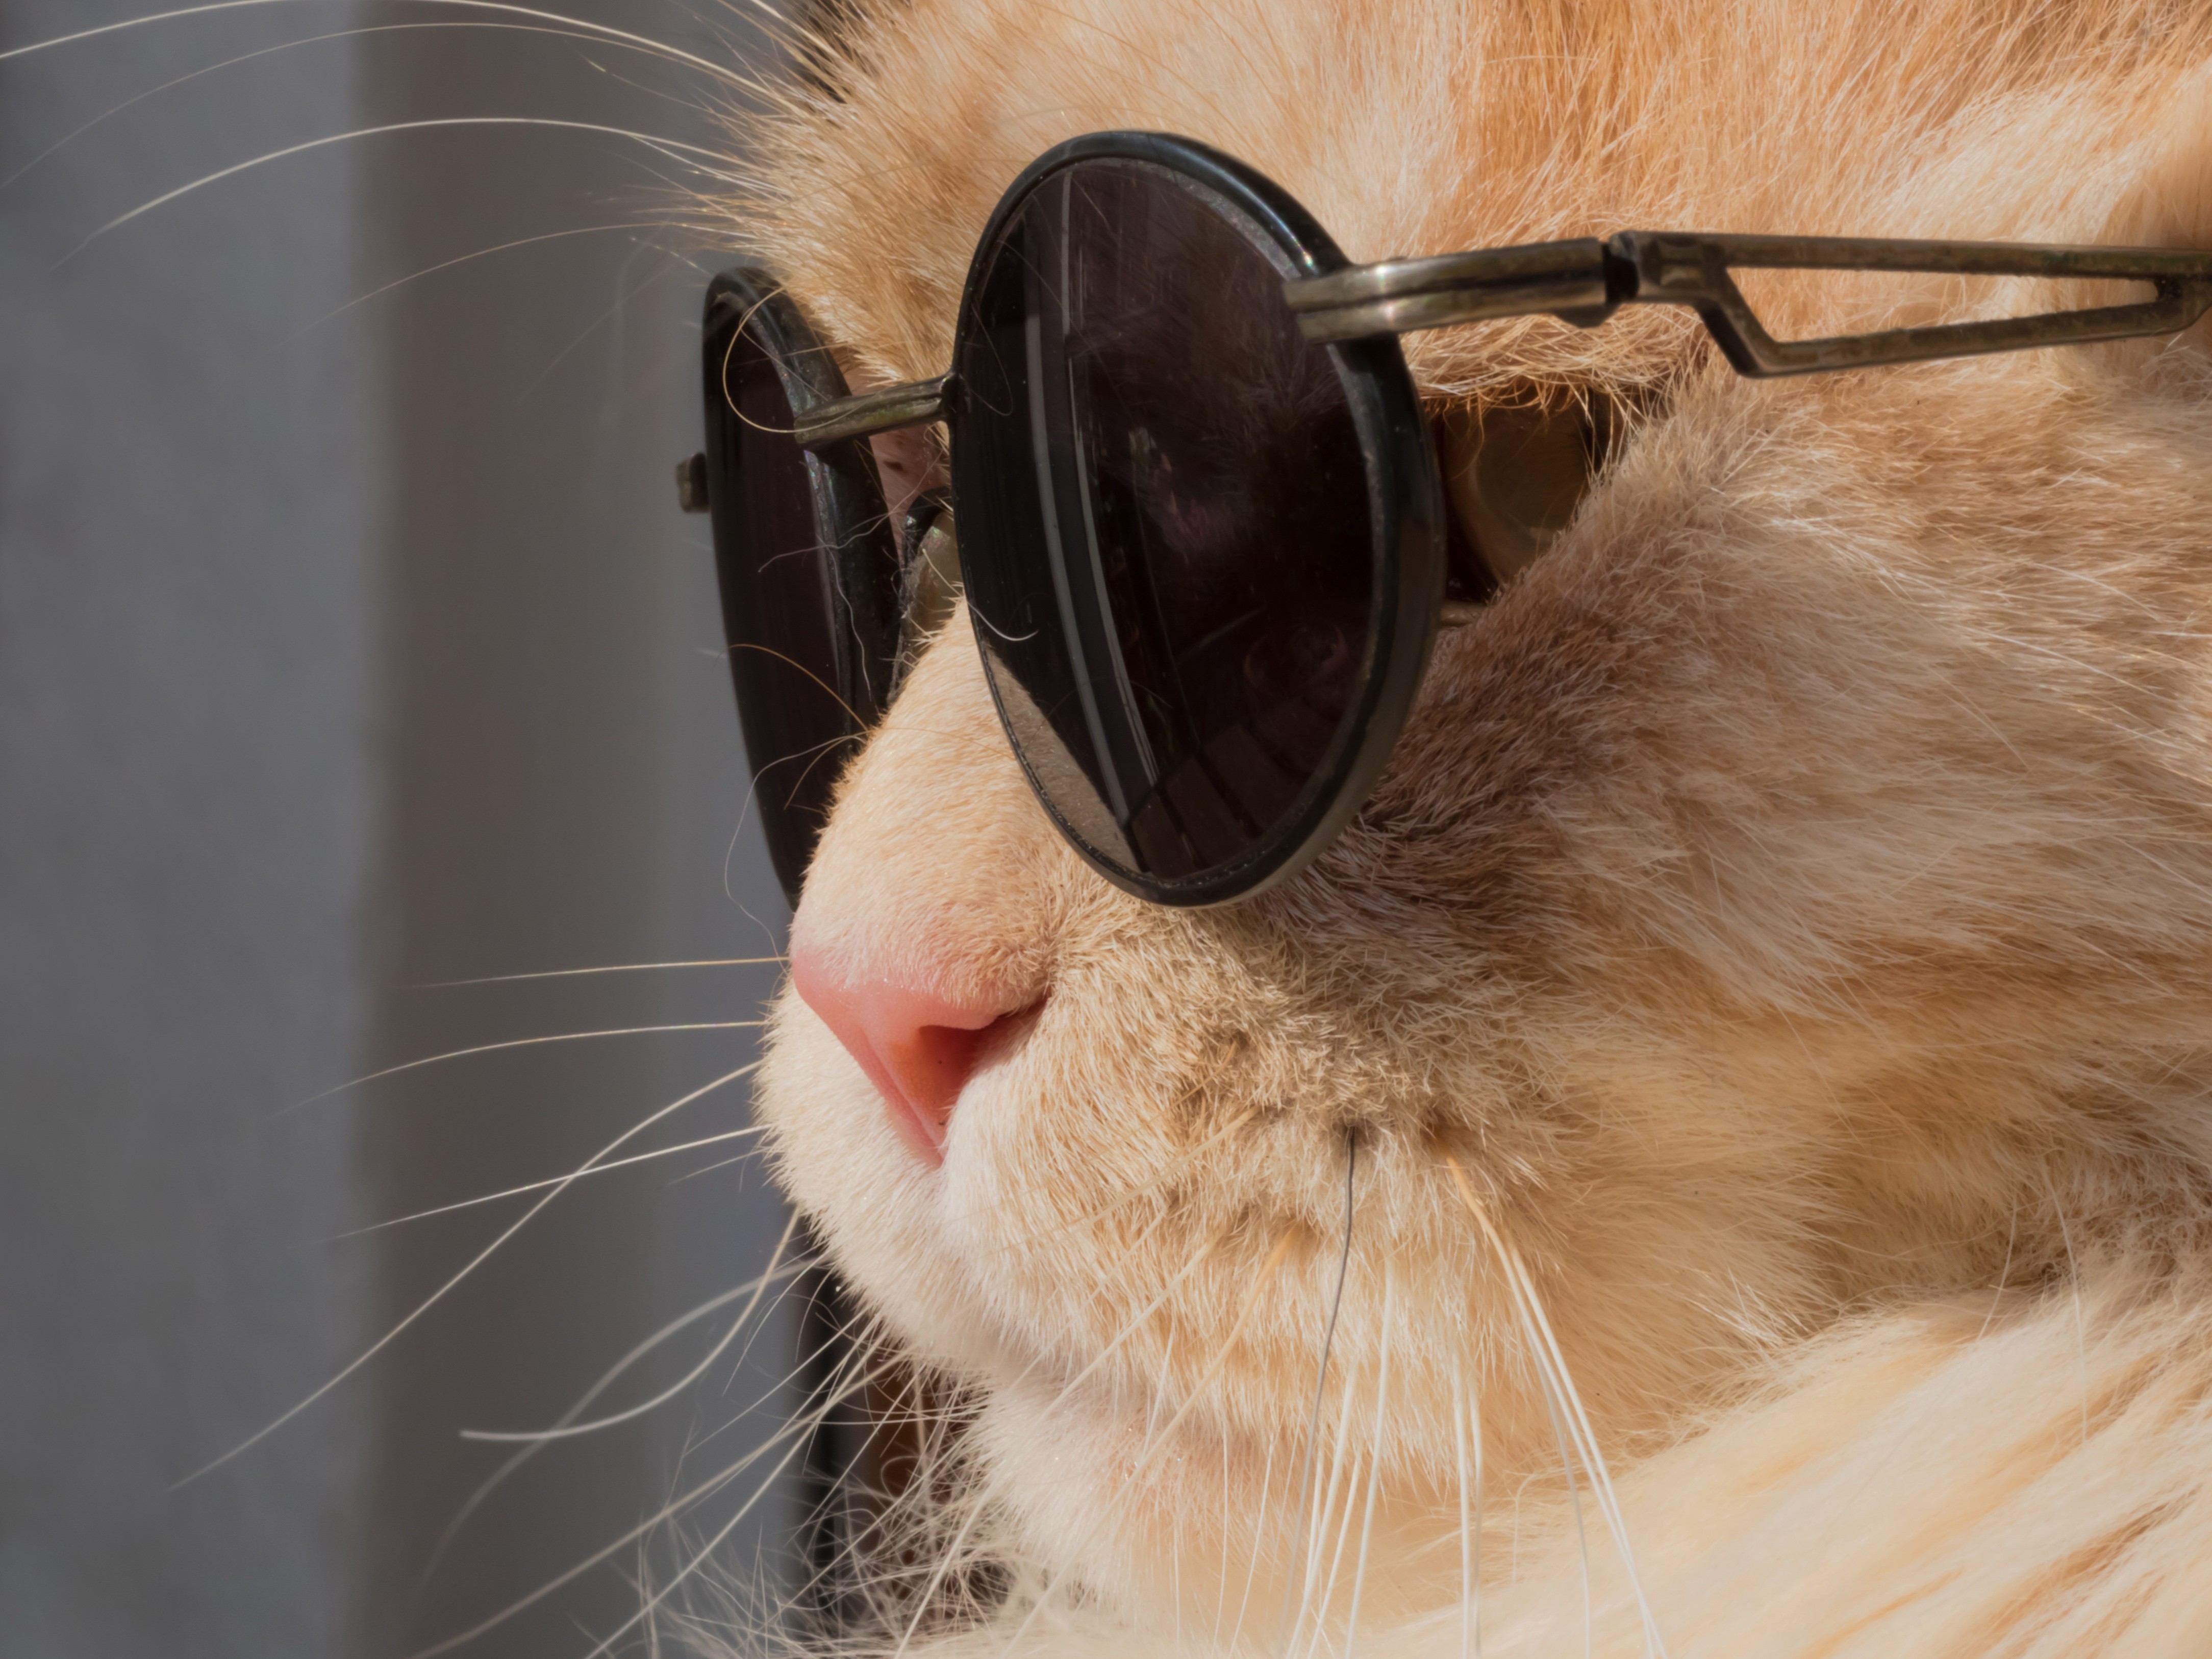 General 4336x3252 cats animals humor Leon: The Professional sunglasses